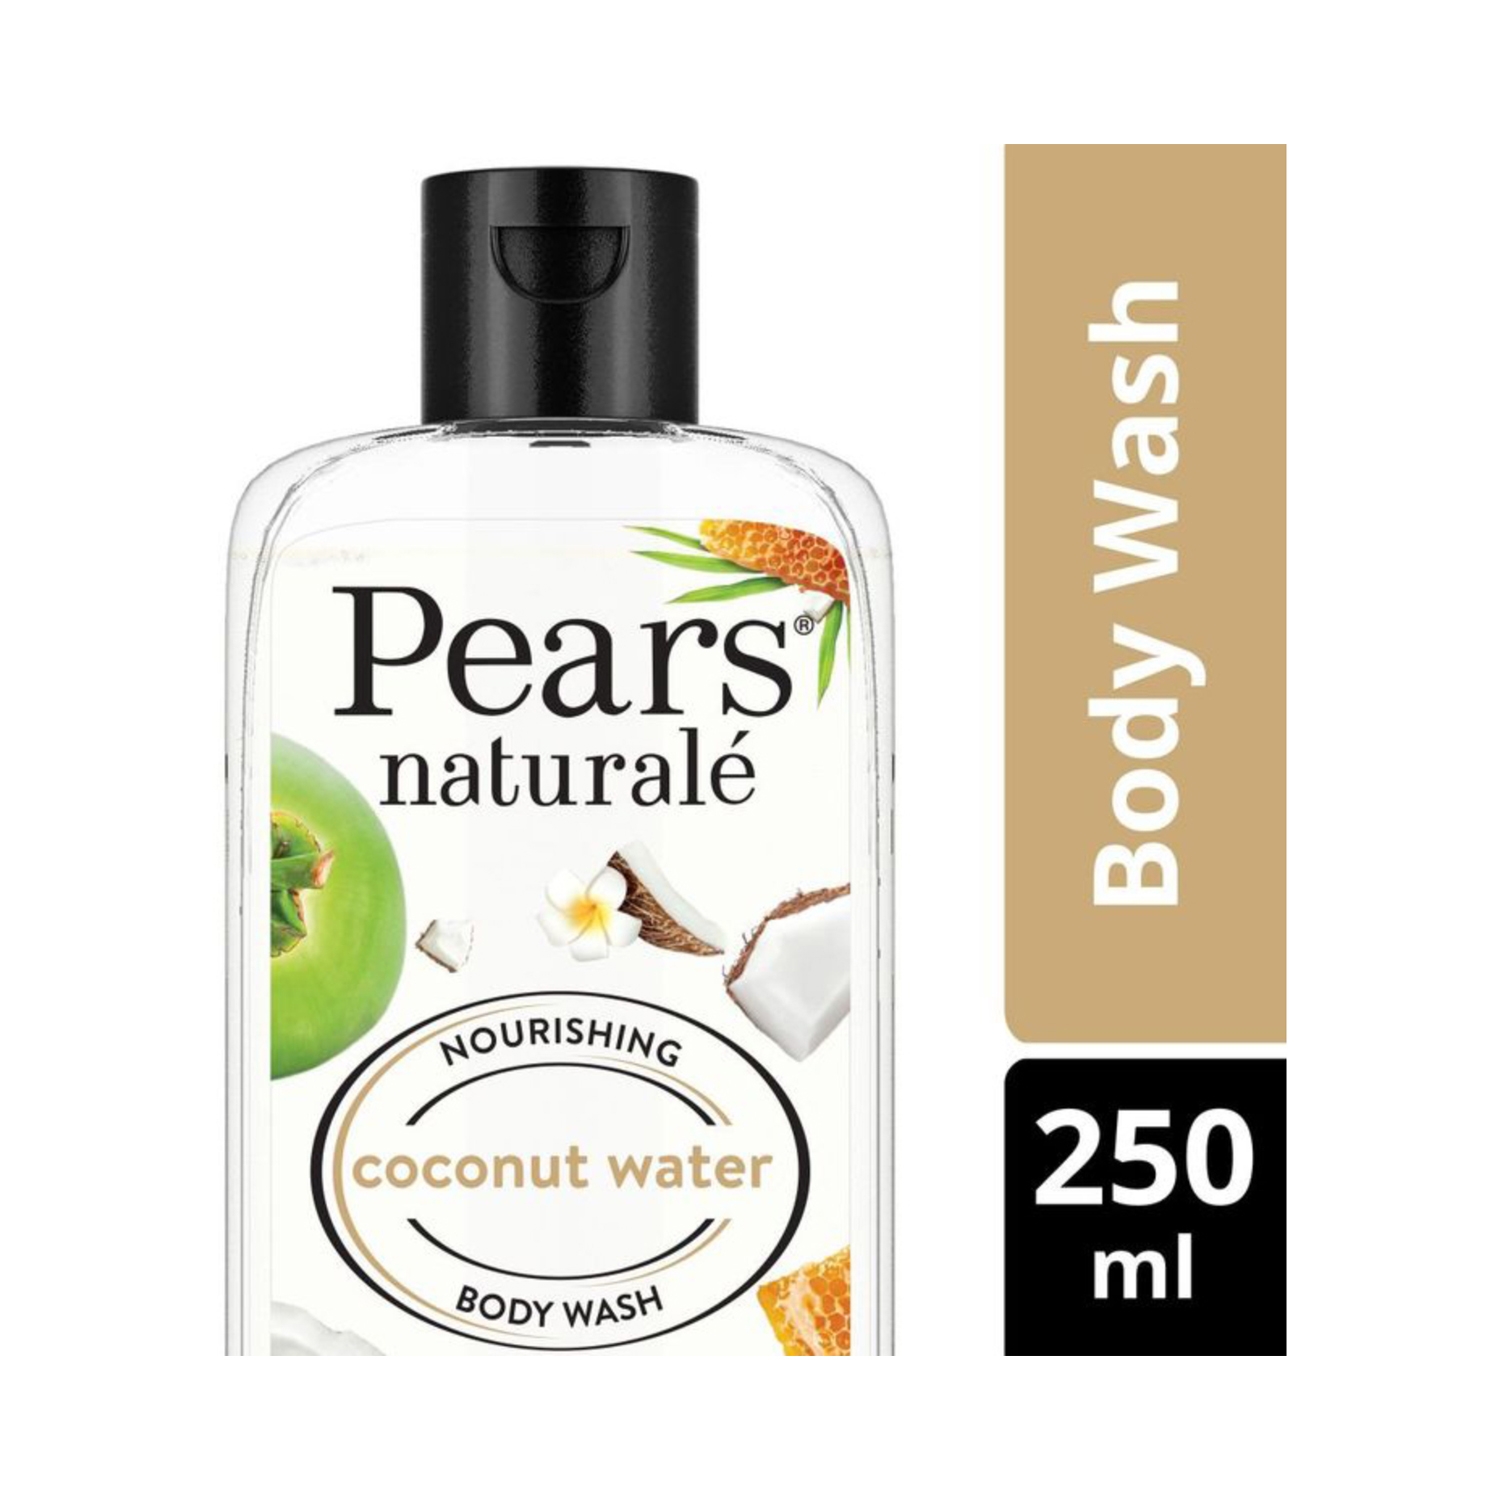 Pears | Pears Naturale Nourishing Coconut Water Body Wash - (250ml)